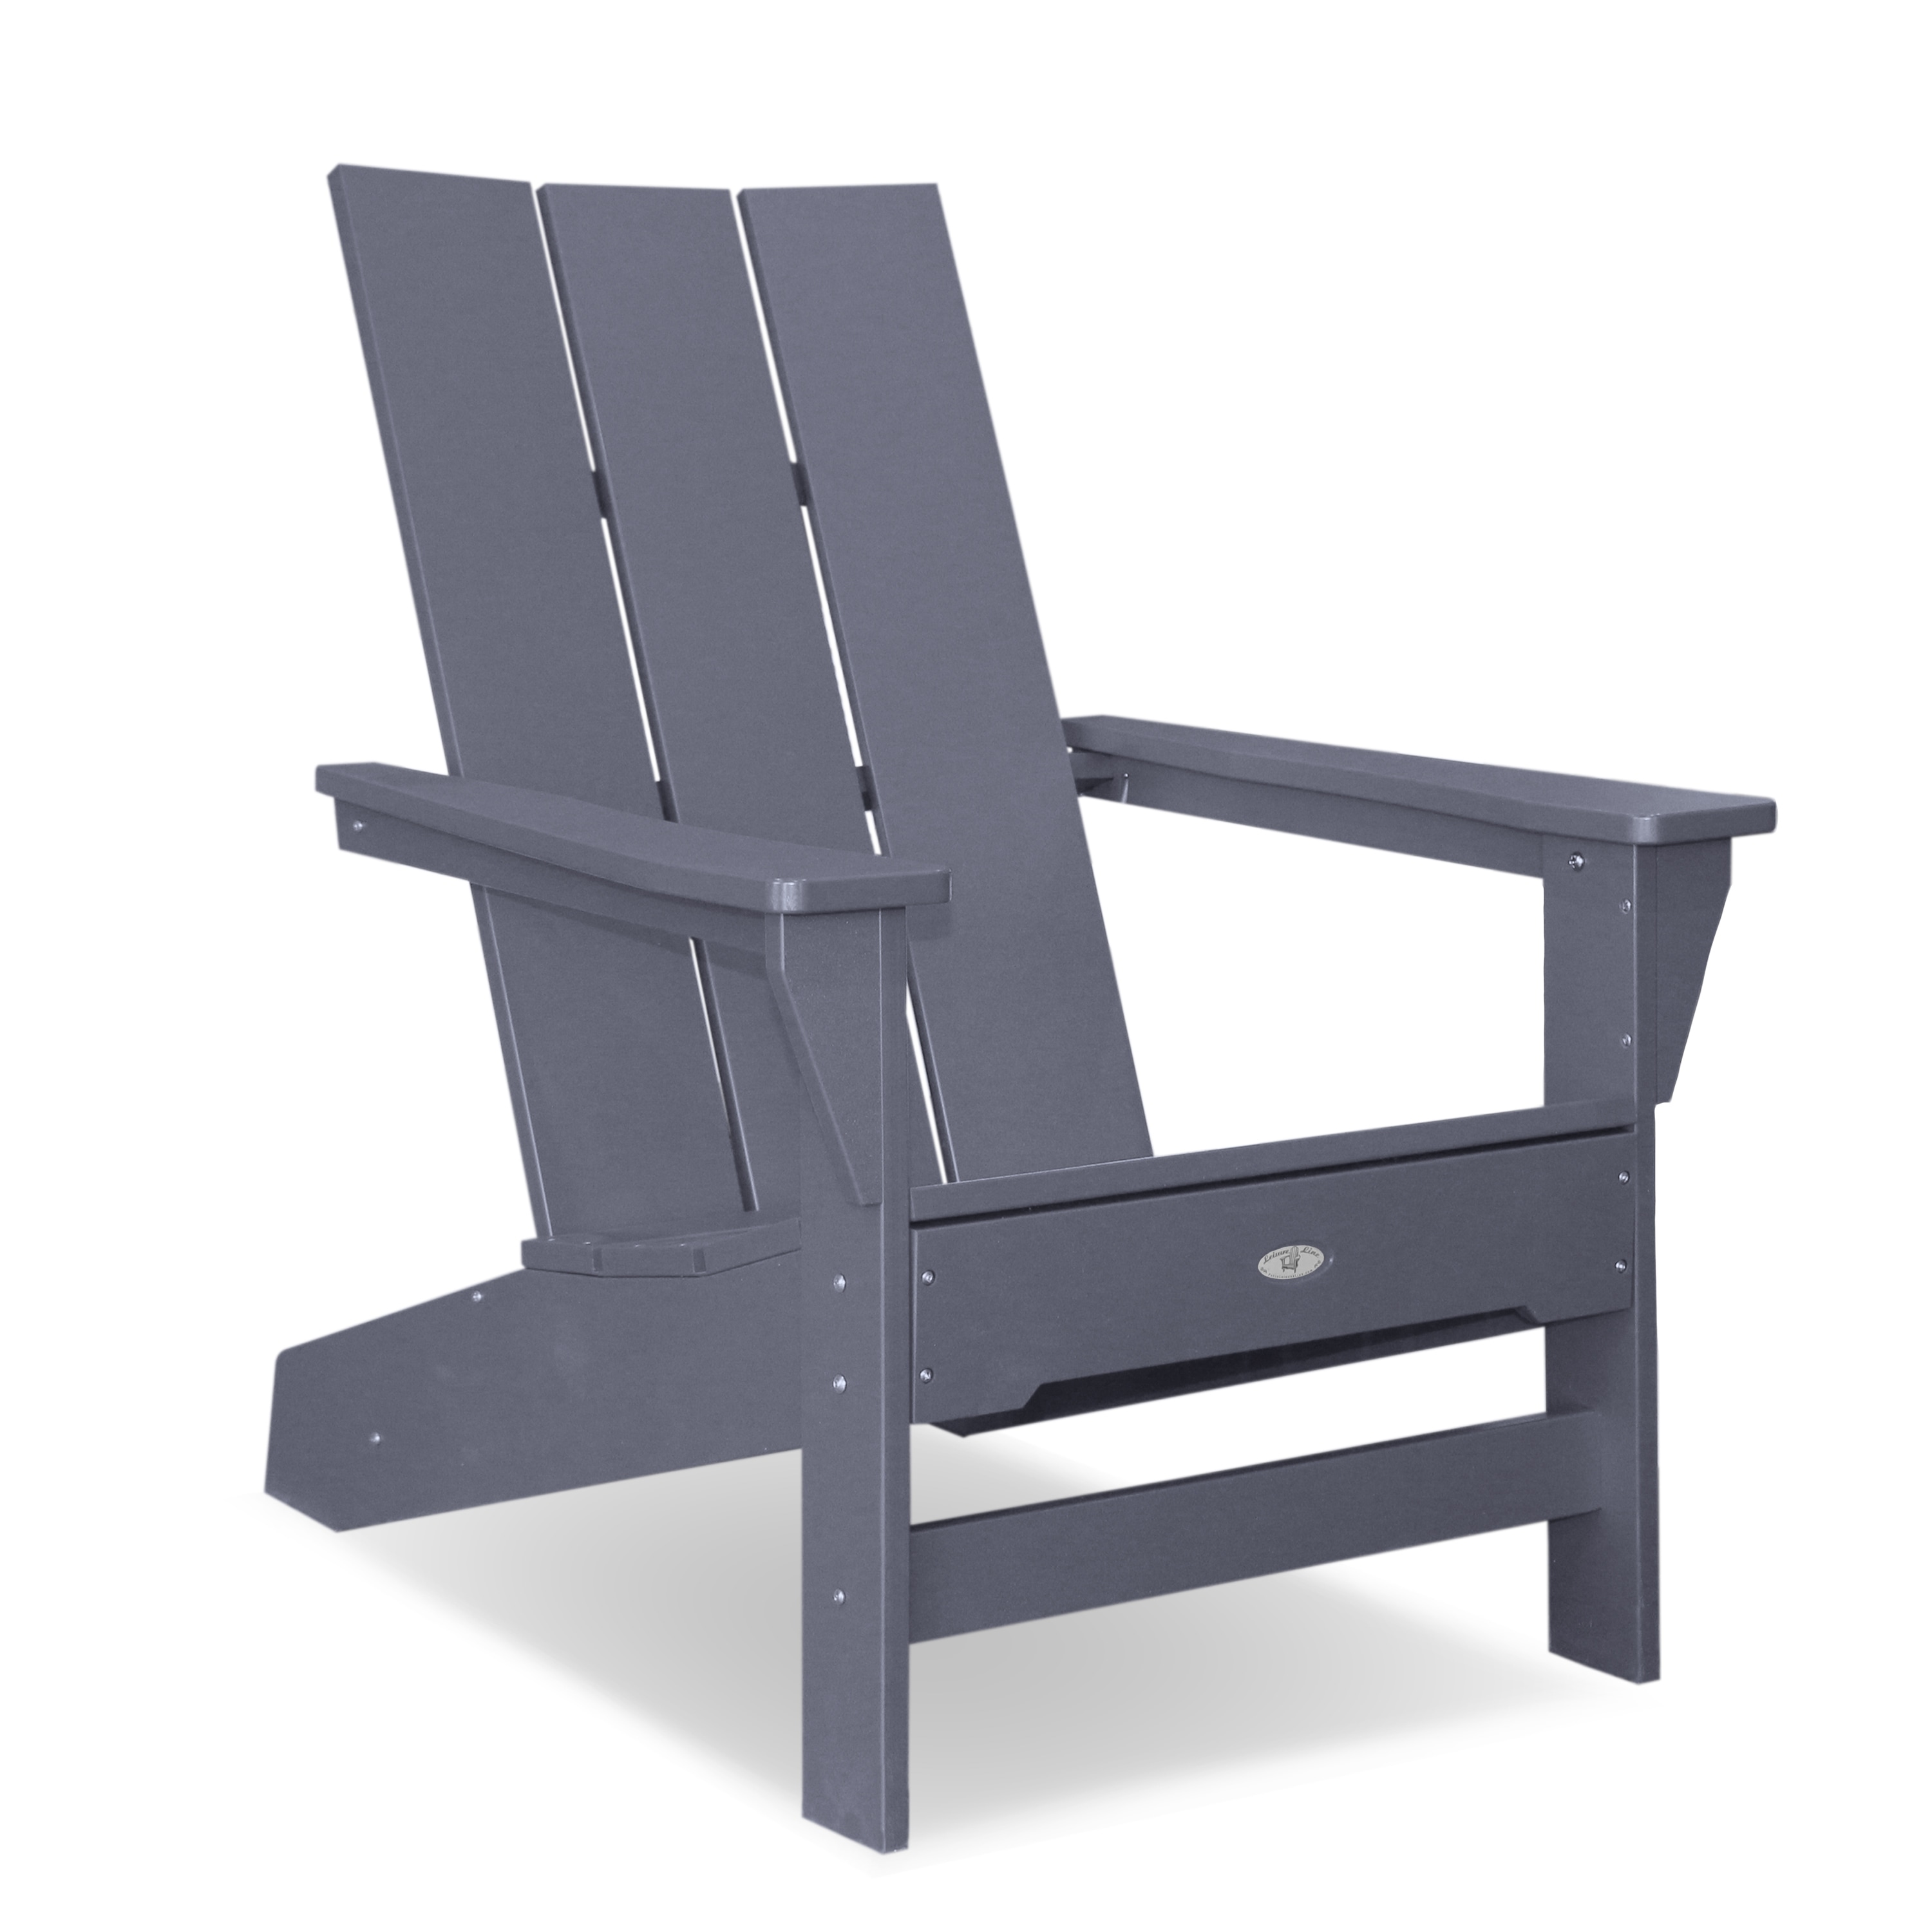 Leisure Line 3-slat Modern Adirondack Chair